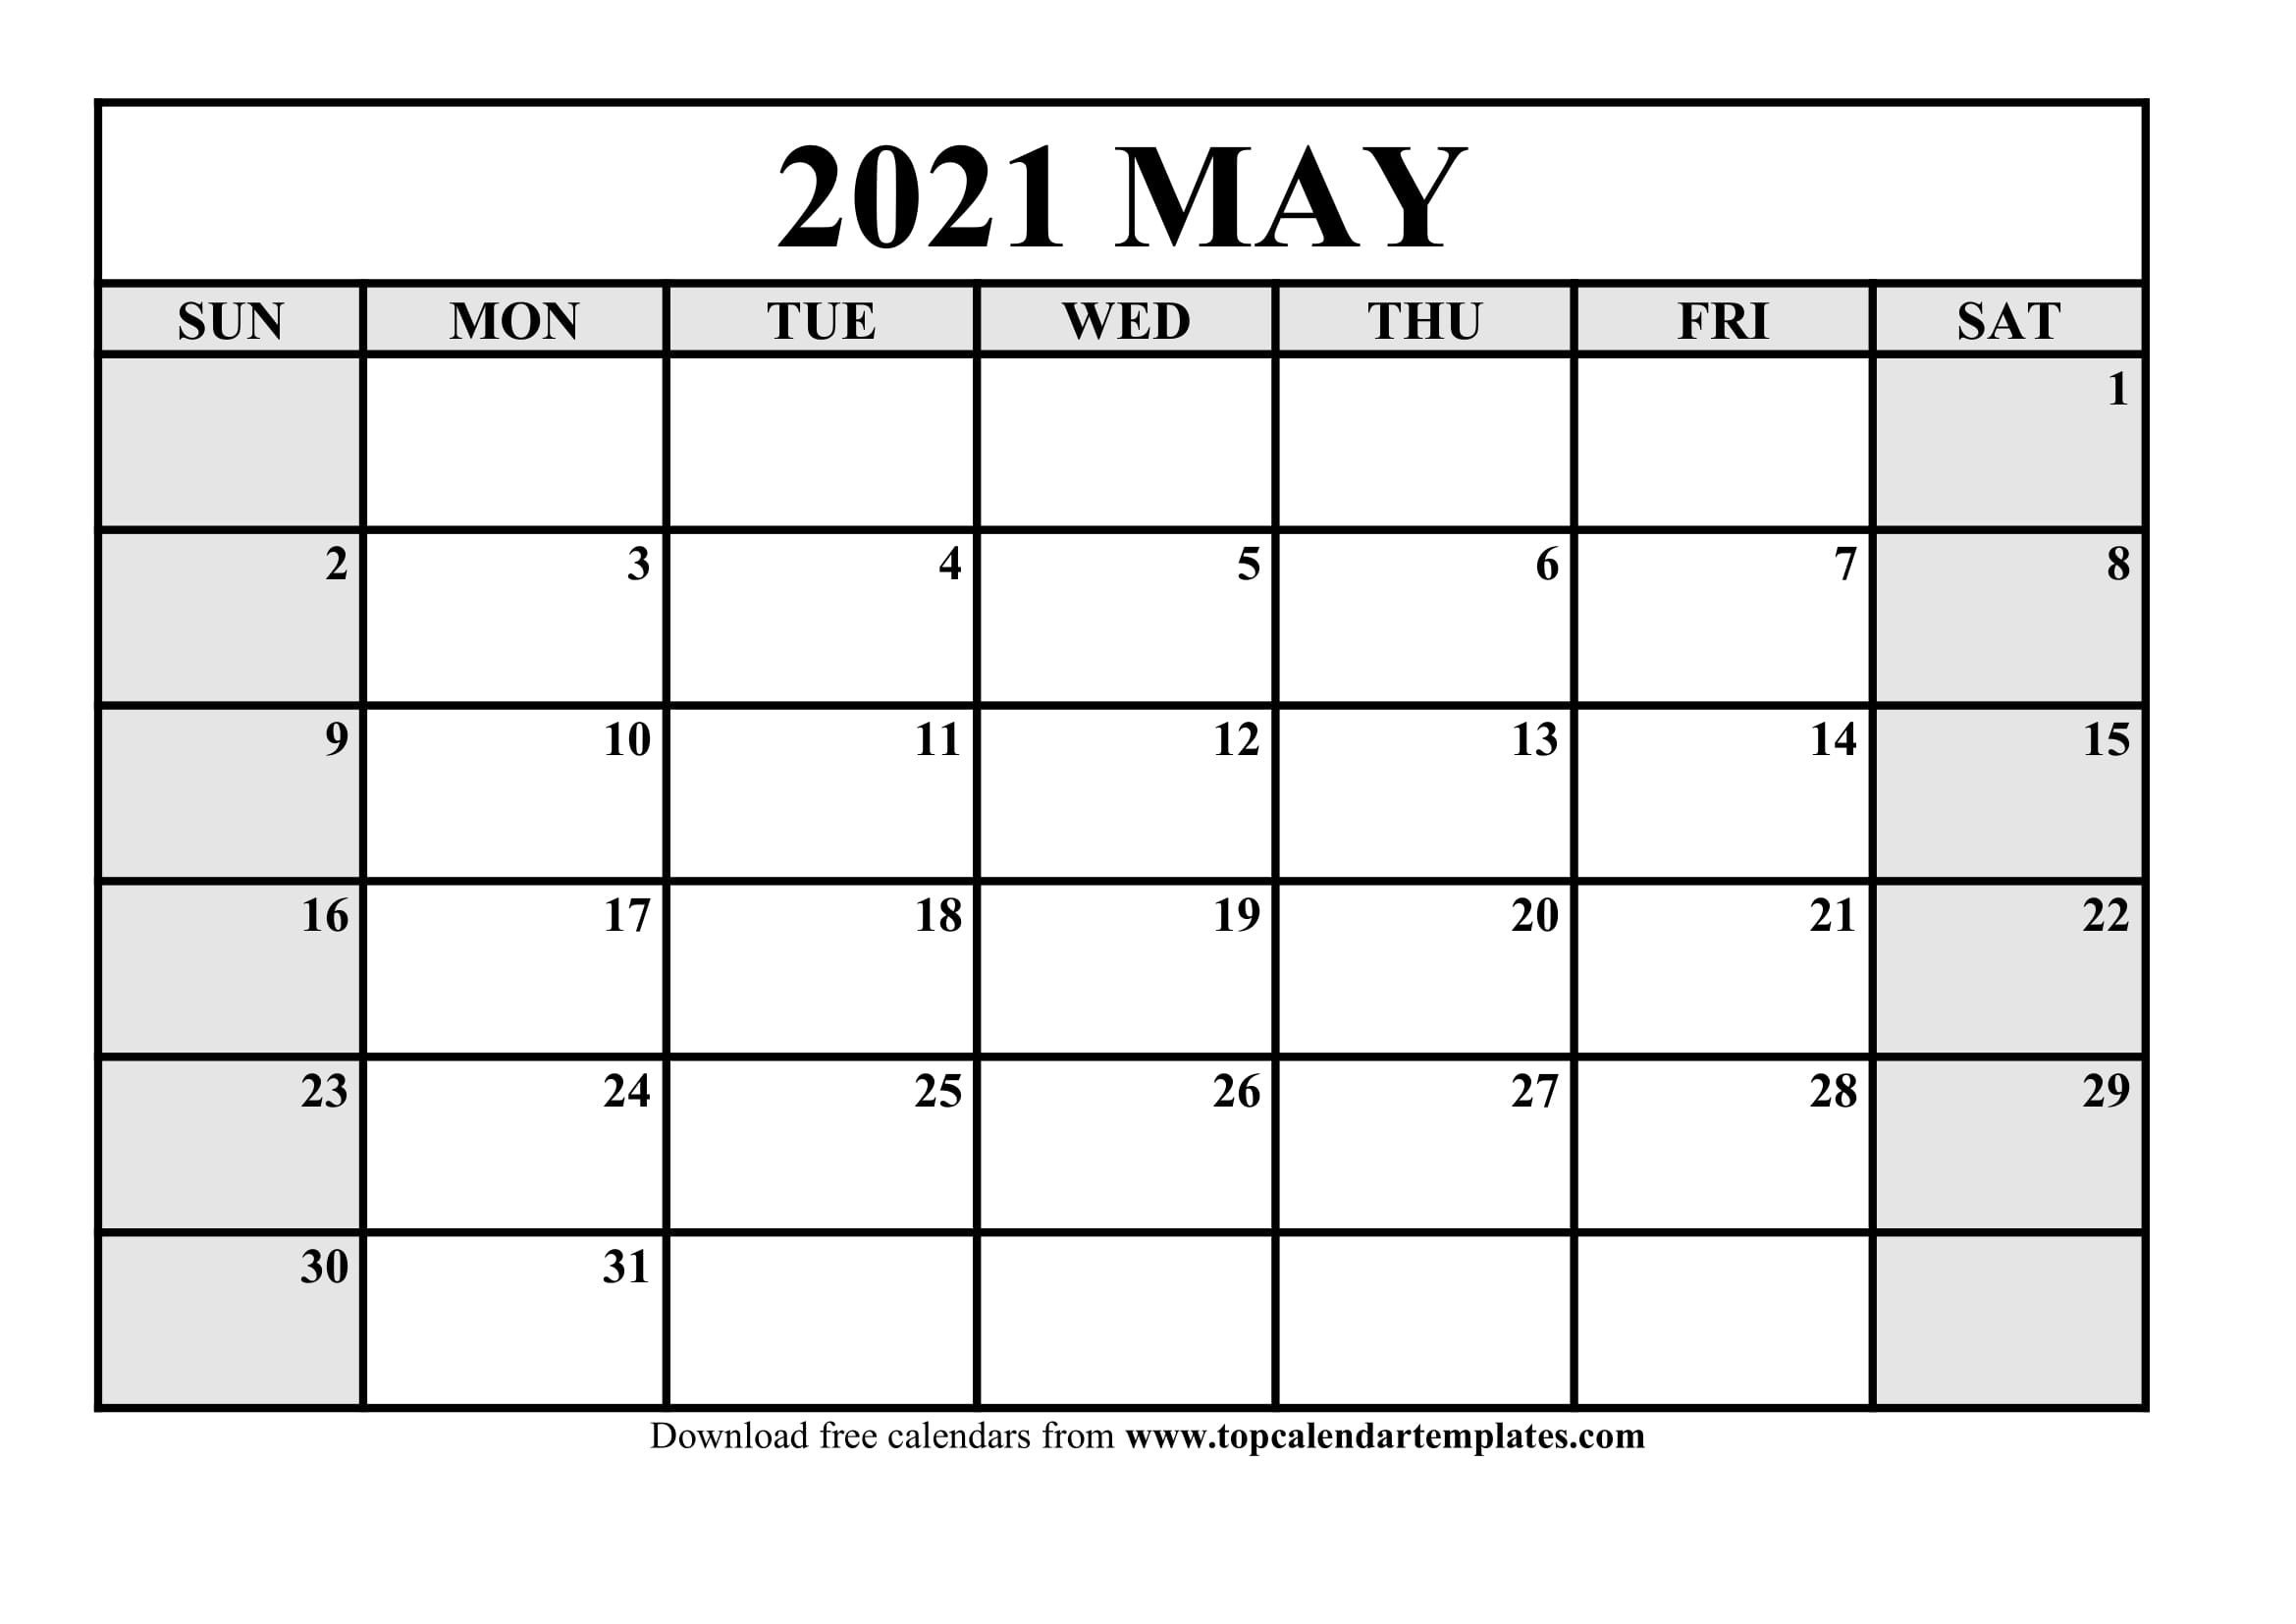 Free May 2021 Printable Calendar In Editable Format May-July 2021 Calendar